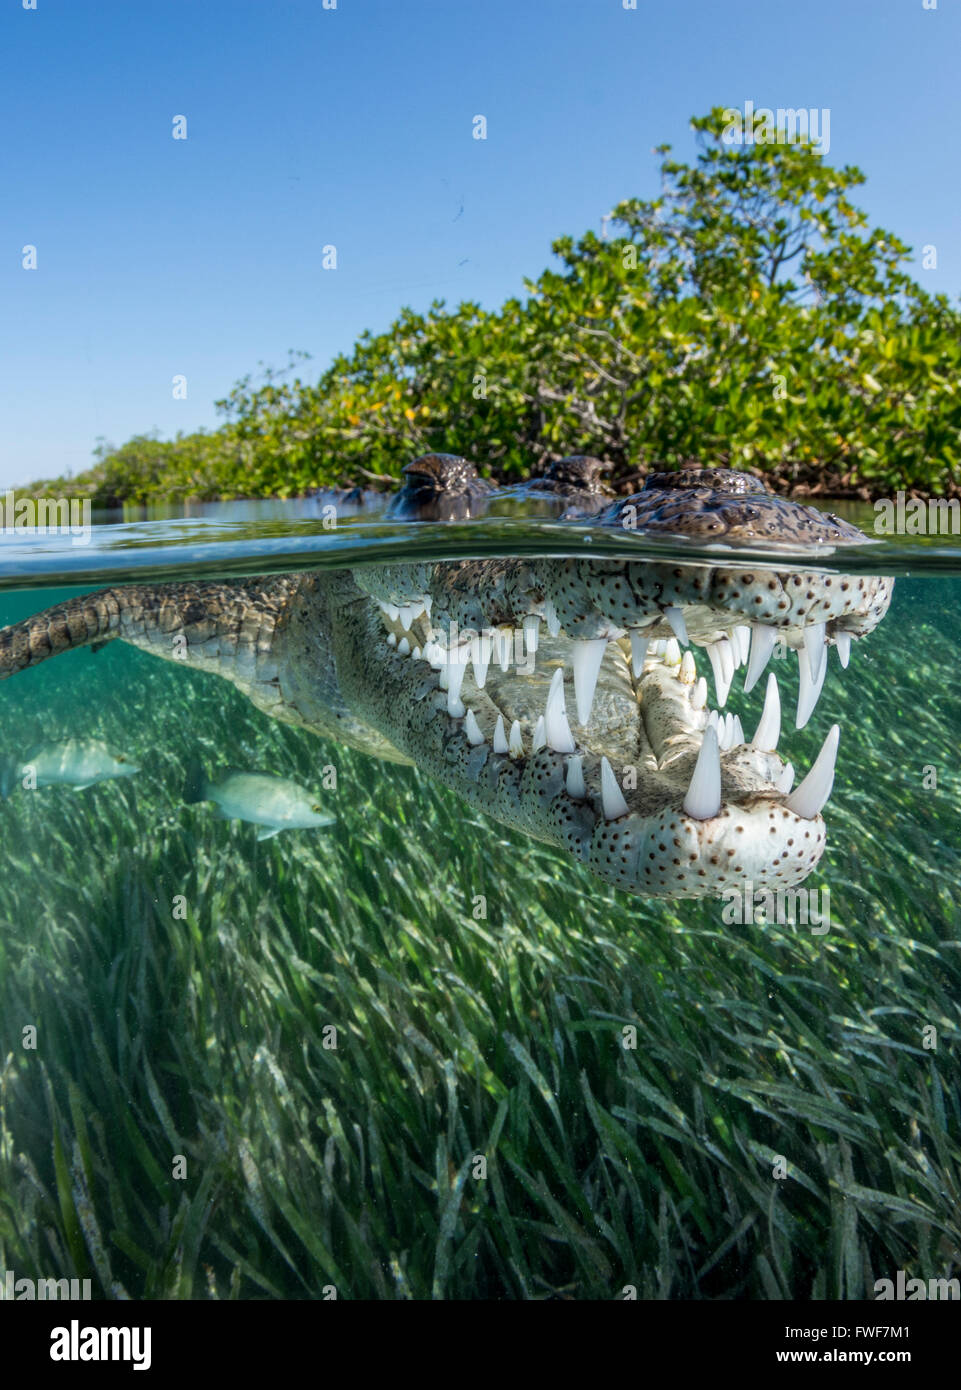 El cocodrilo de agua salada, Crocodylus porosus, Jardines de la Reina, Cuba, Mar Caribe Foto de stock